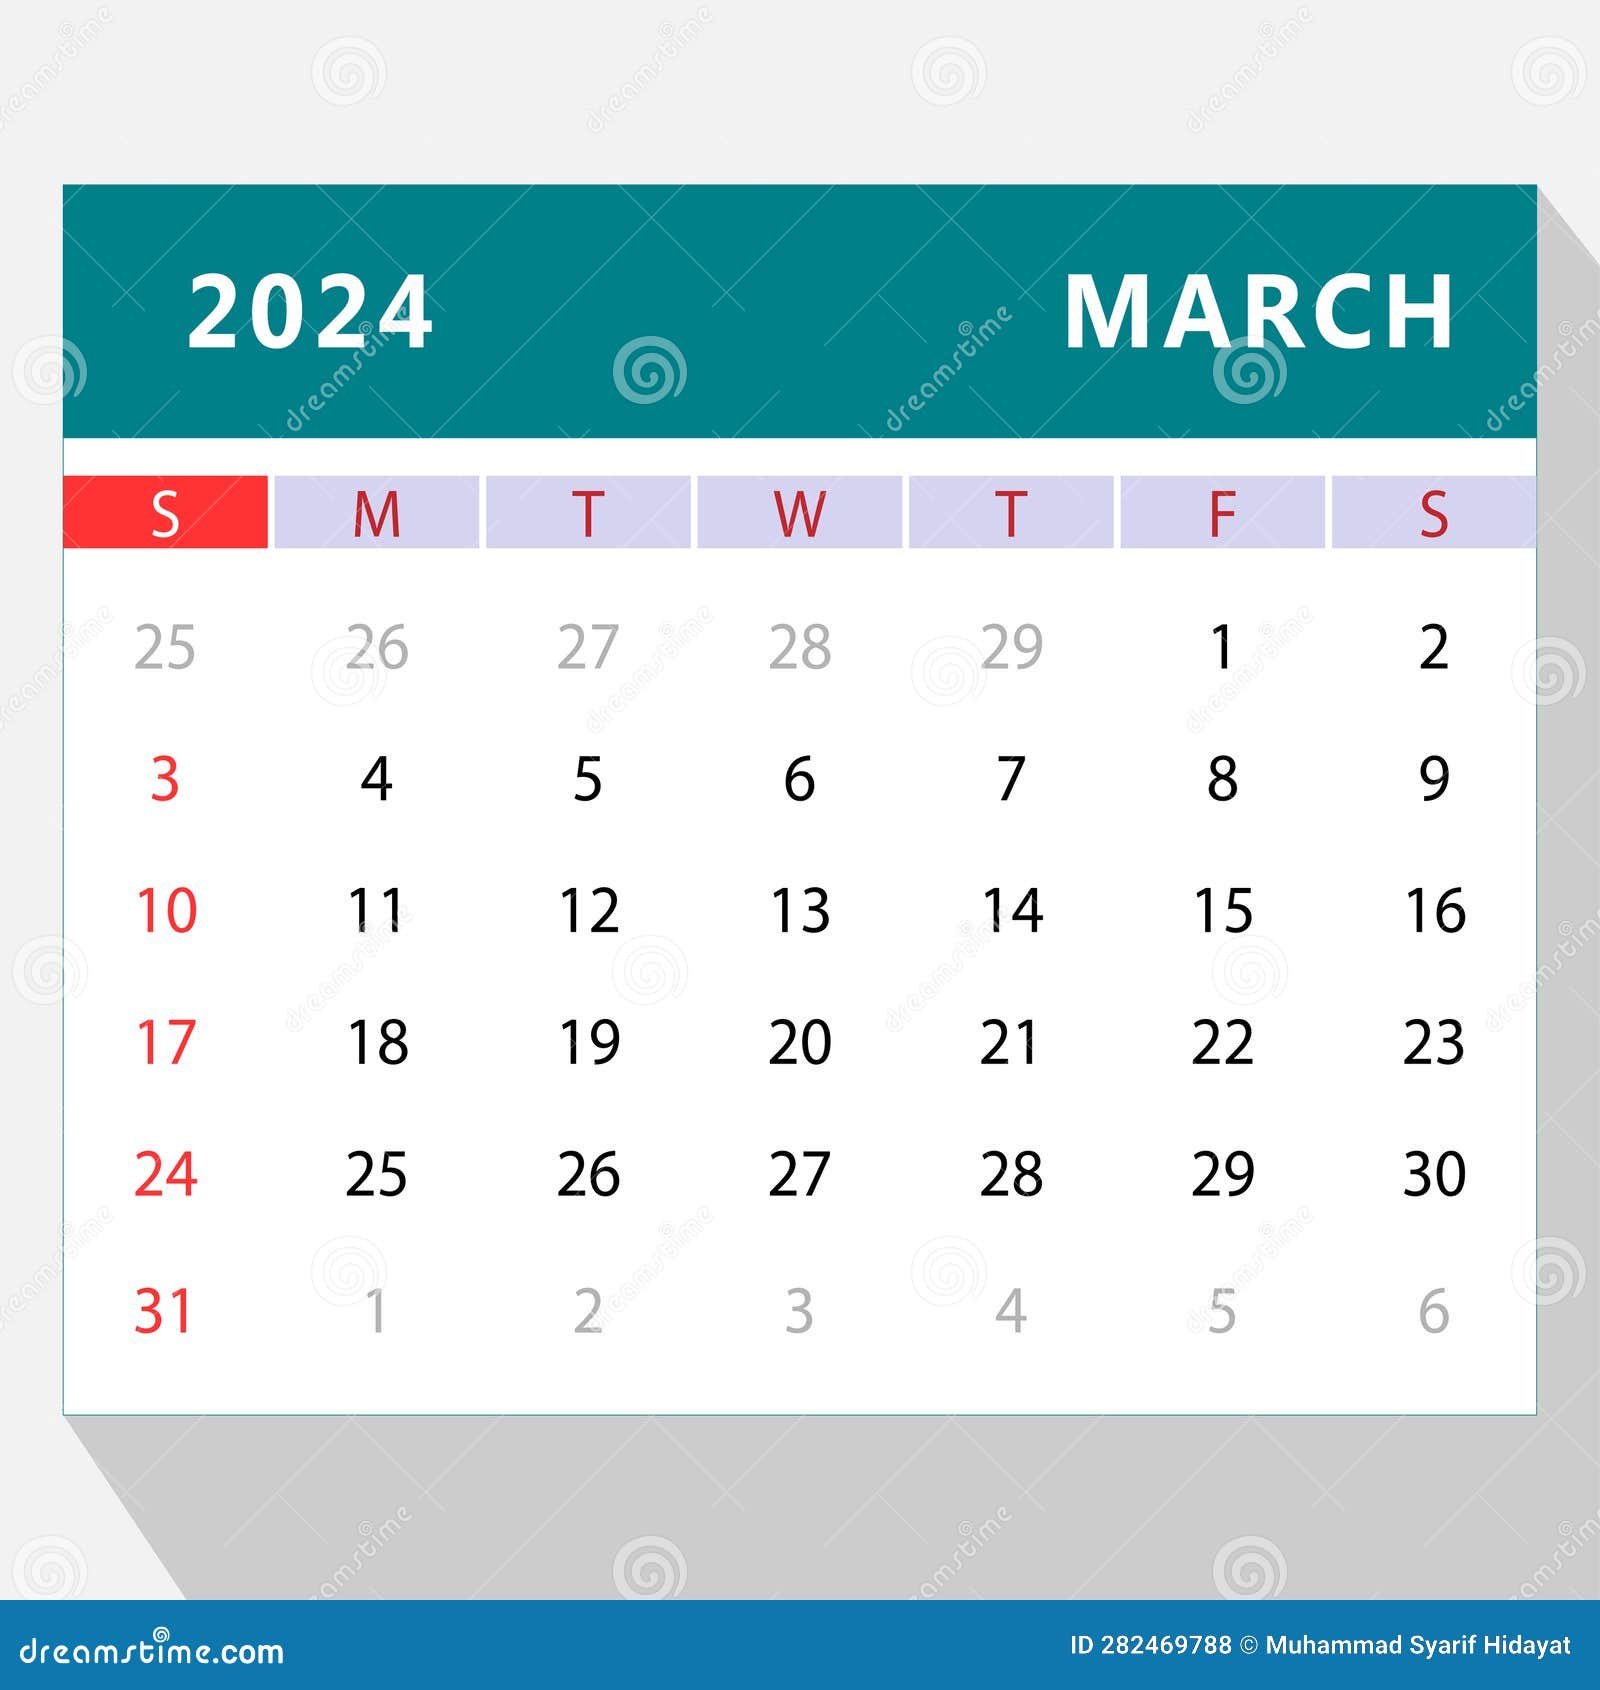 March 2024 calendar stock vector. Illustration of vector 282469788